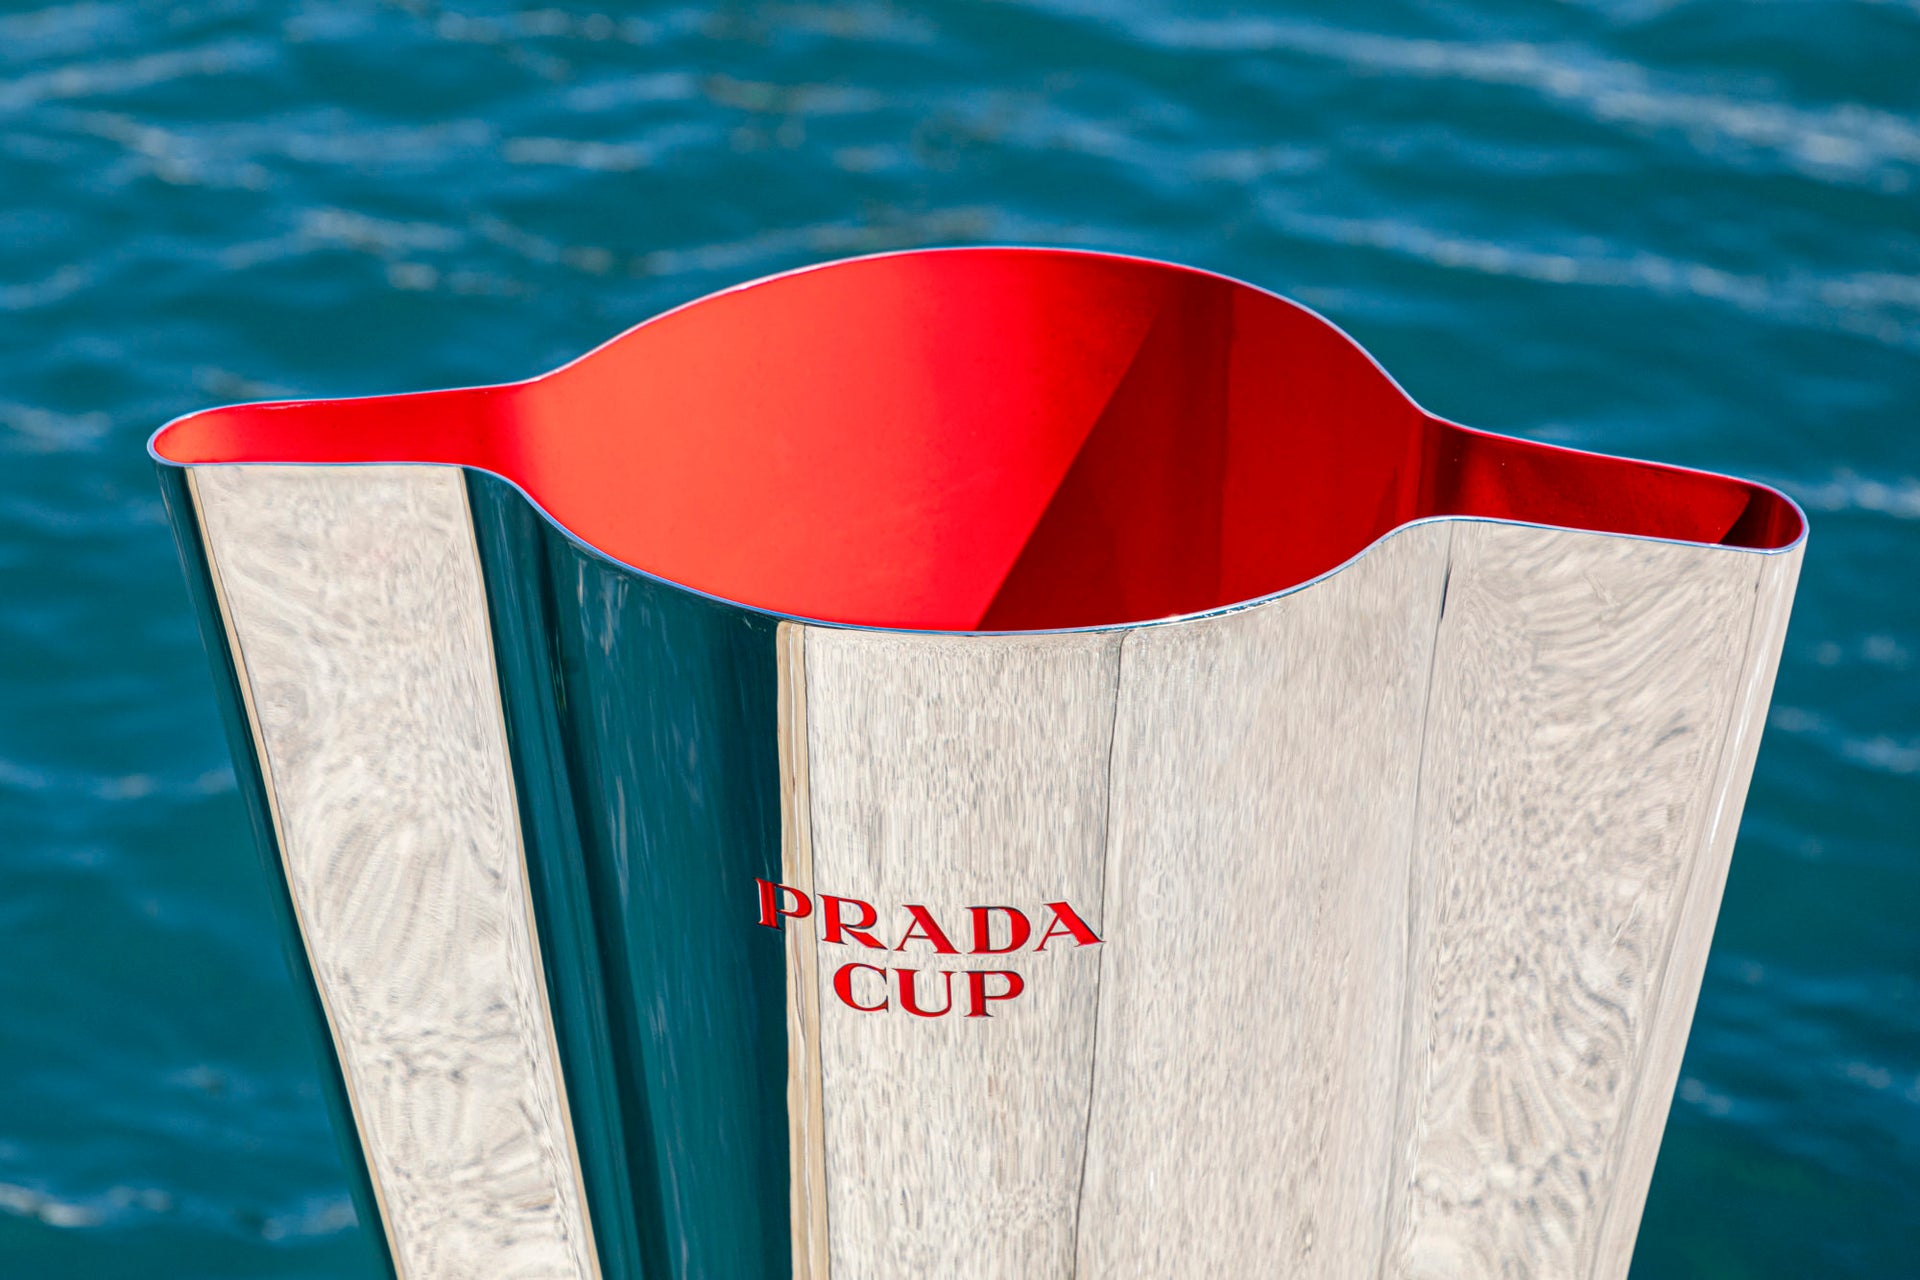 LIVE UPDATES: THE PRADA CUP